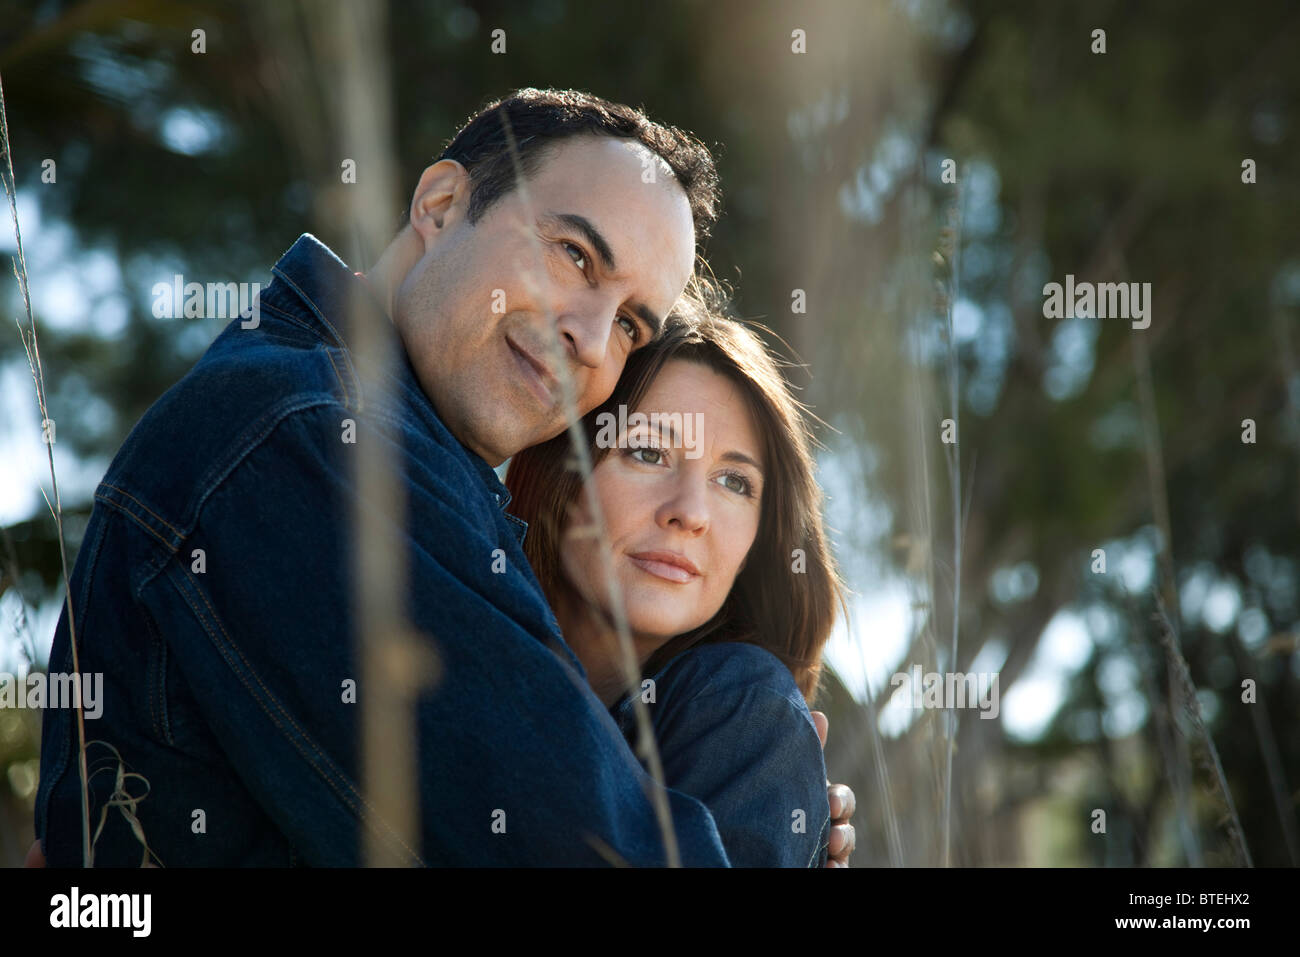 Young couple embracing outdoors, portrait Banque D'Images